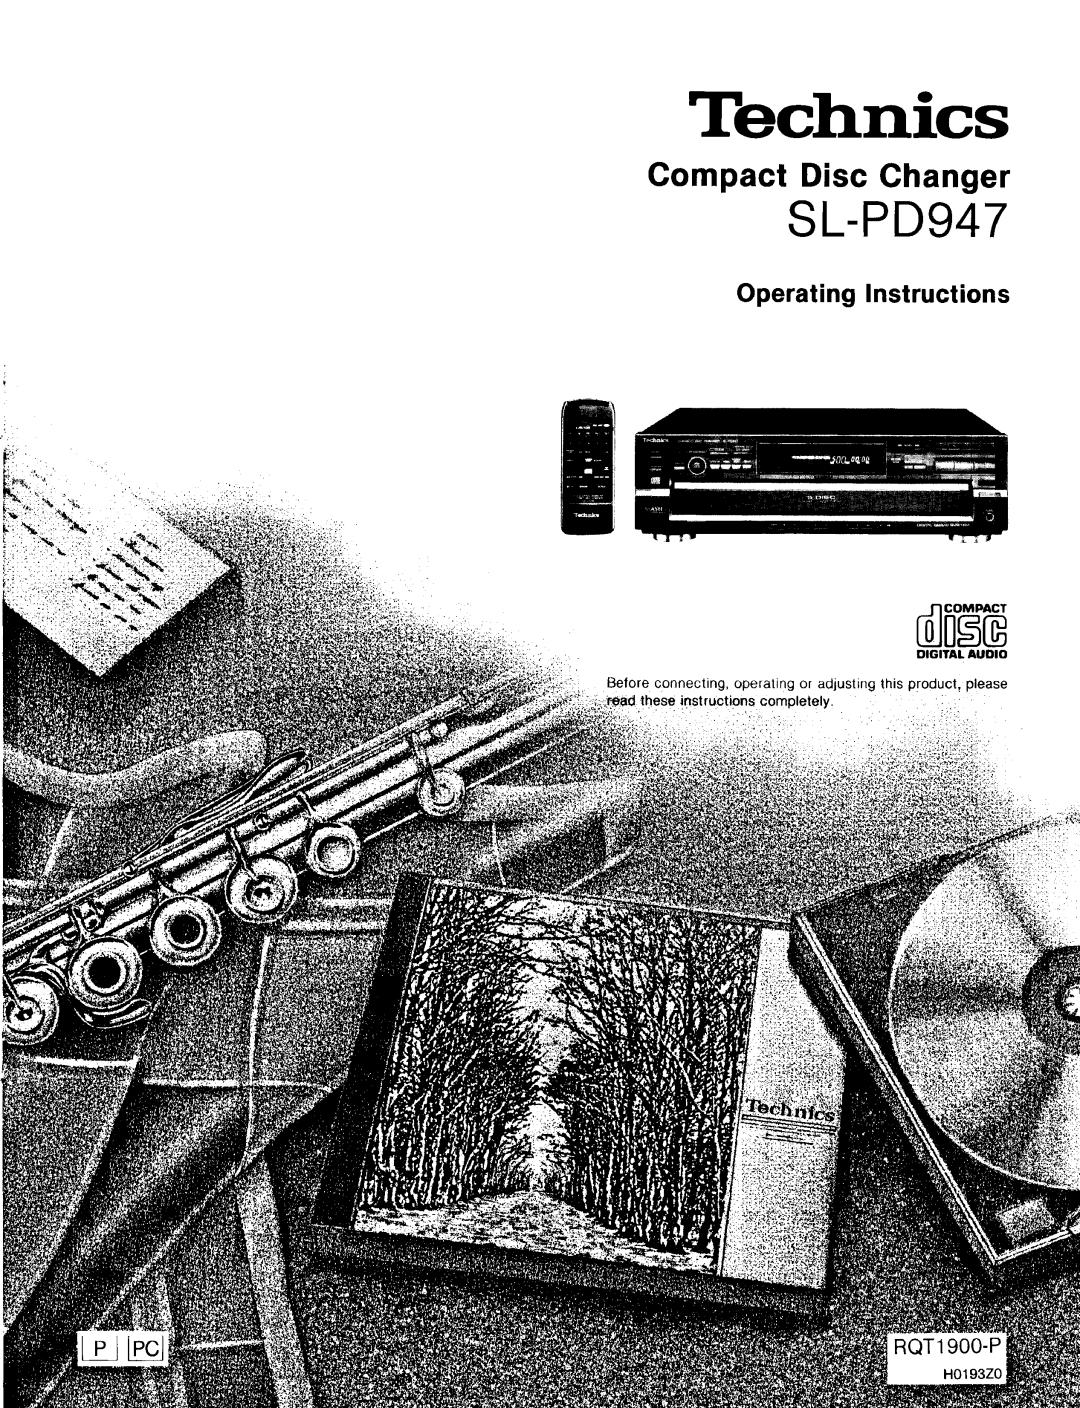 Technics SL-PD947 operating instructions Technics, Compact Disc Changer, Digital Audio 